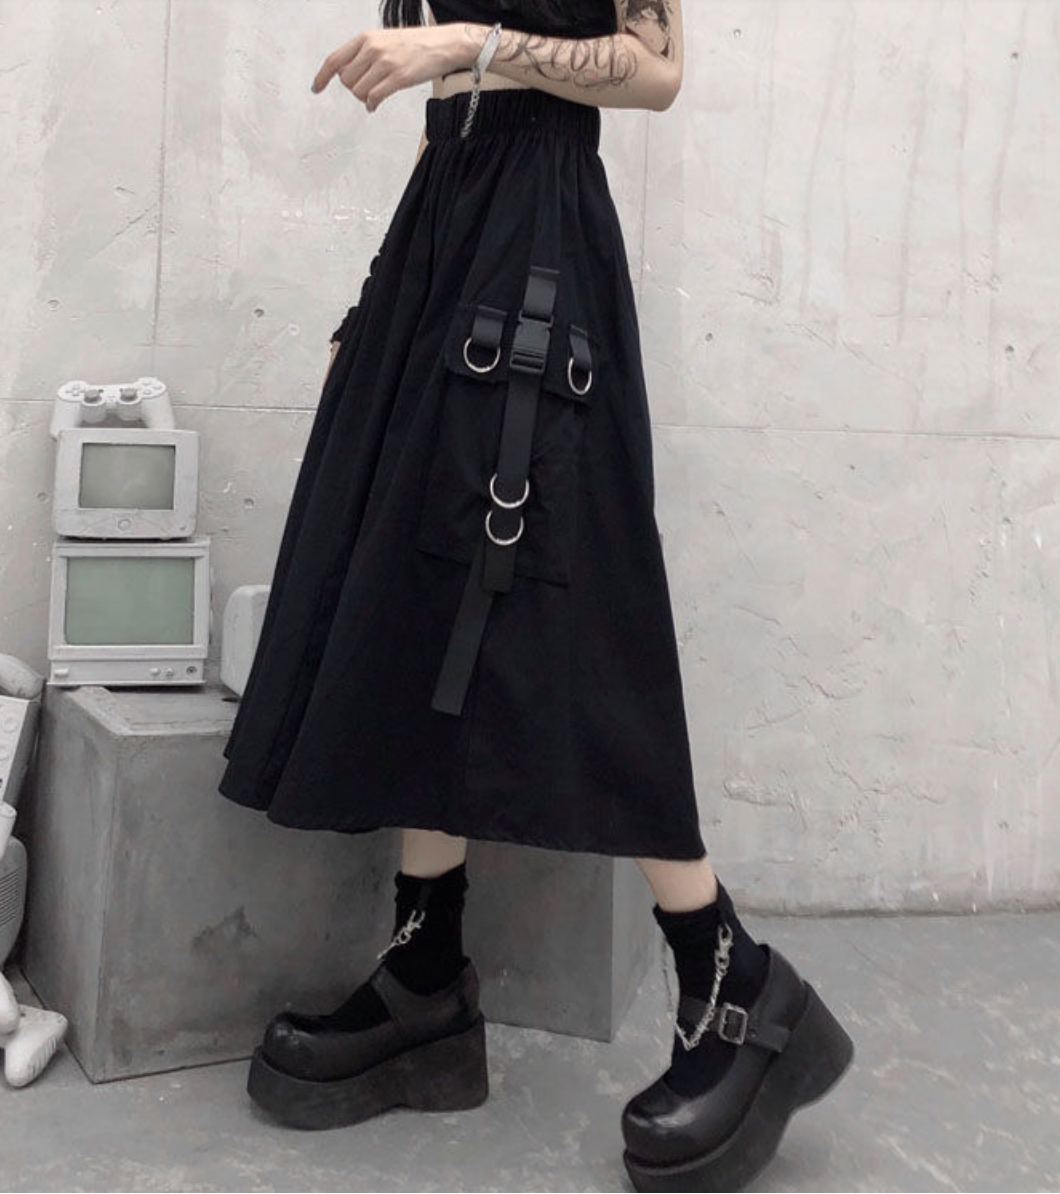 black cargo skirt maxi